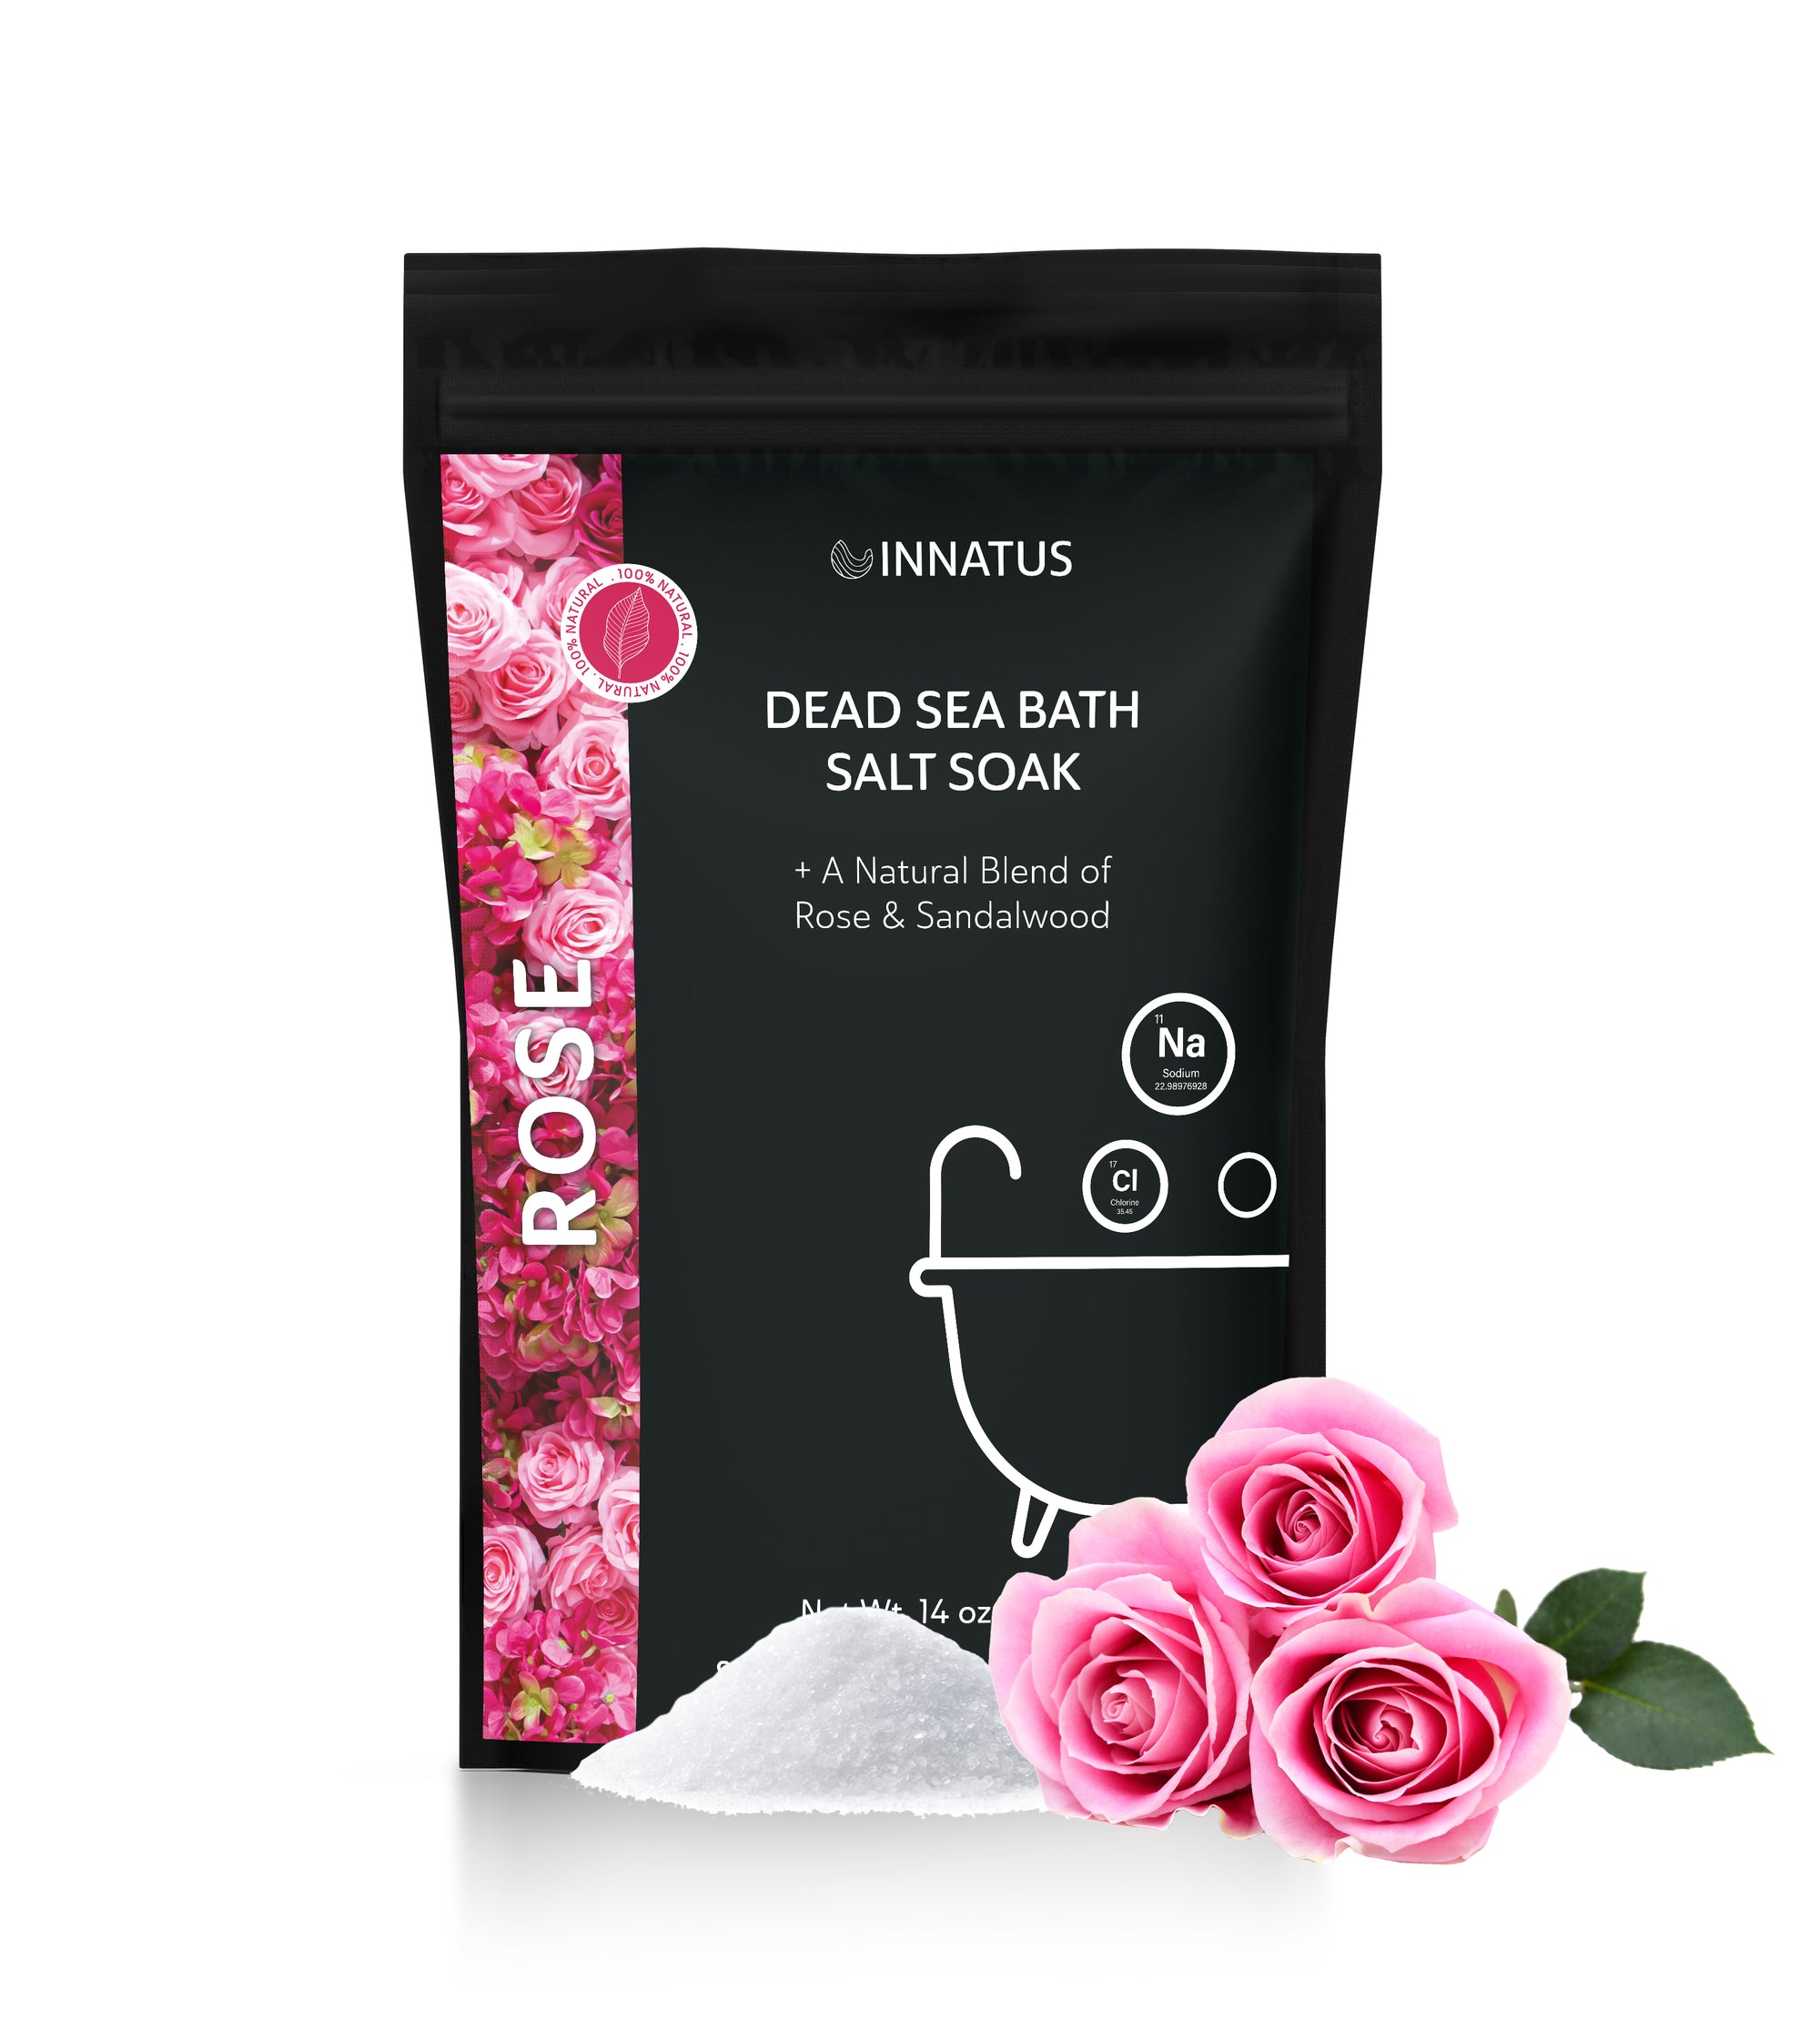 Dead sea rose bath salt soak with 21 minerals